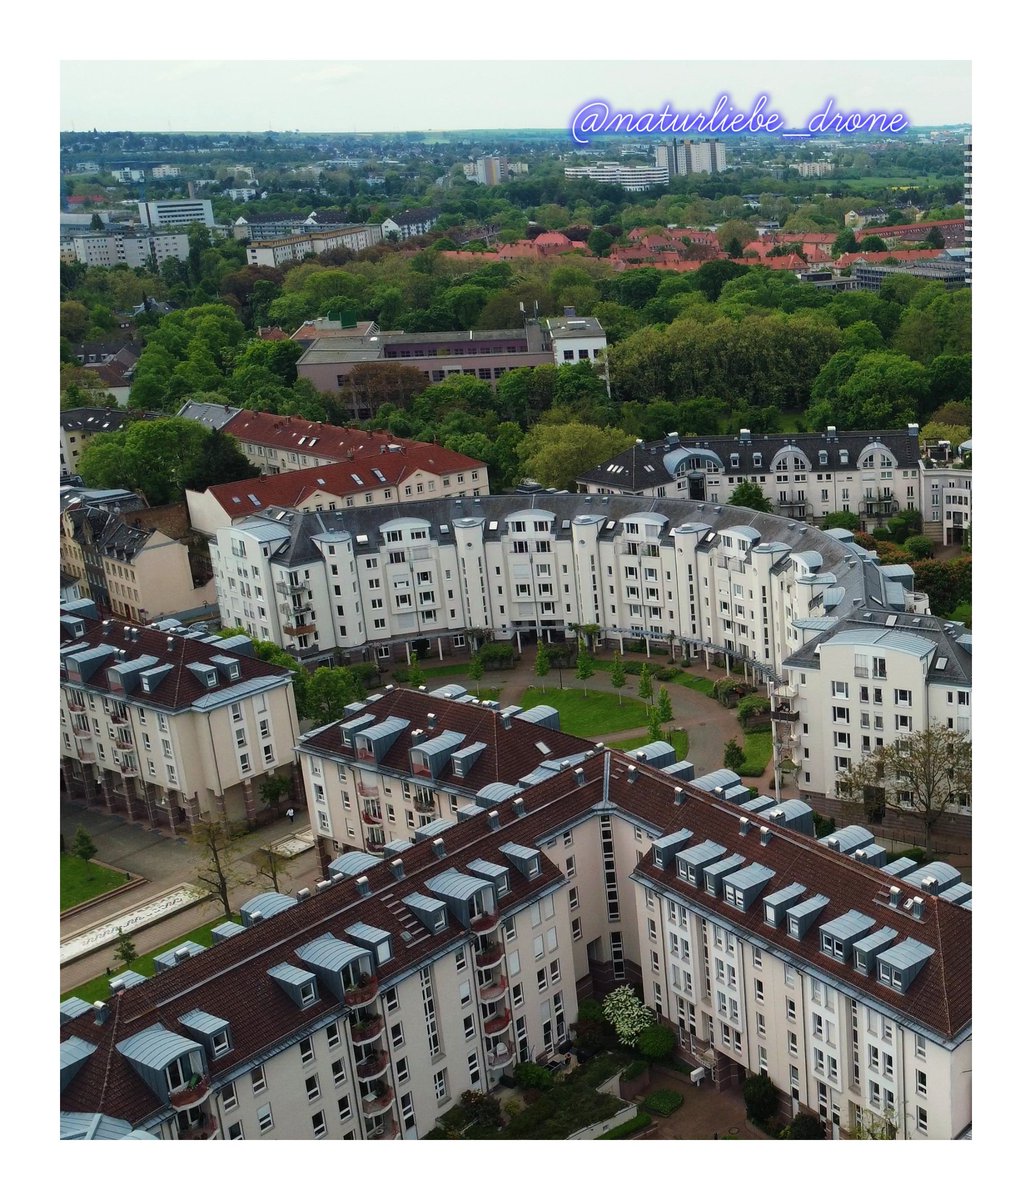 Mainz 🙂 🦅🛸

#naturliebe_drone #naturliebedrone #mainz #mainzliebe #stadt #stadtreise #reise #reisen #reisereise #fotostadt #arhitecture #arhitektura  #droneflying #germany #deuschland #drone #droneshots #dronefly #dronepilot #dronepilots #dronefoto